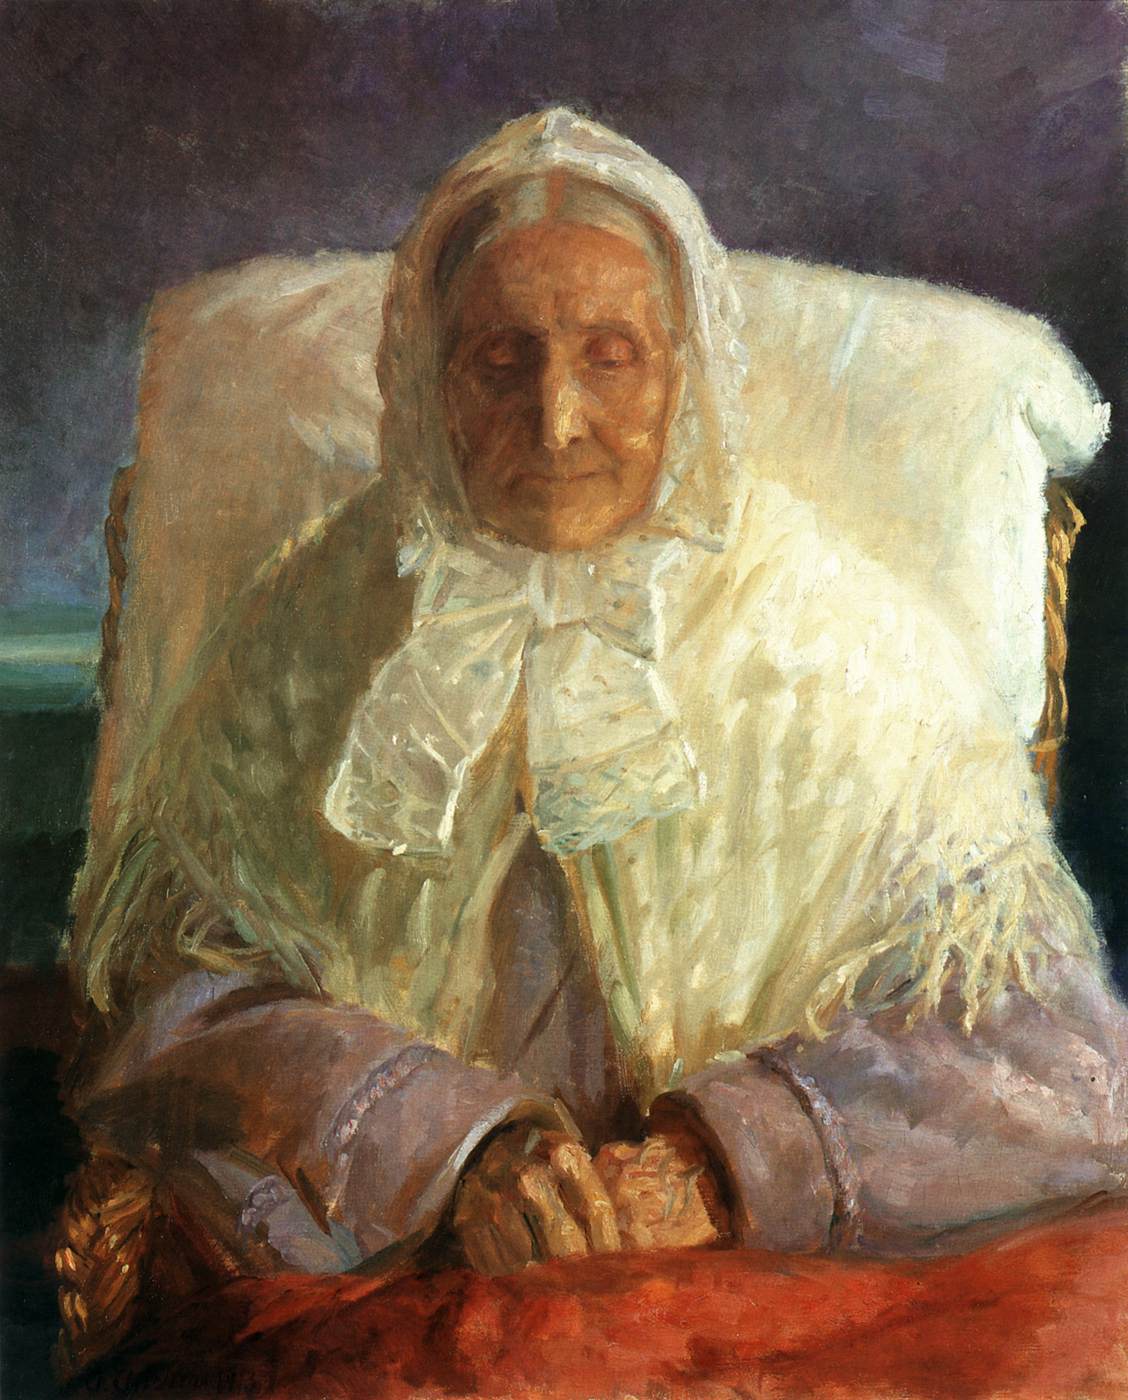 La Madre del Artista, Ana Hedvig Brøndum